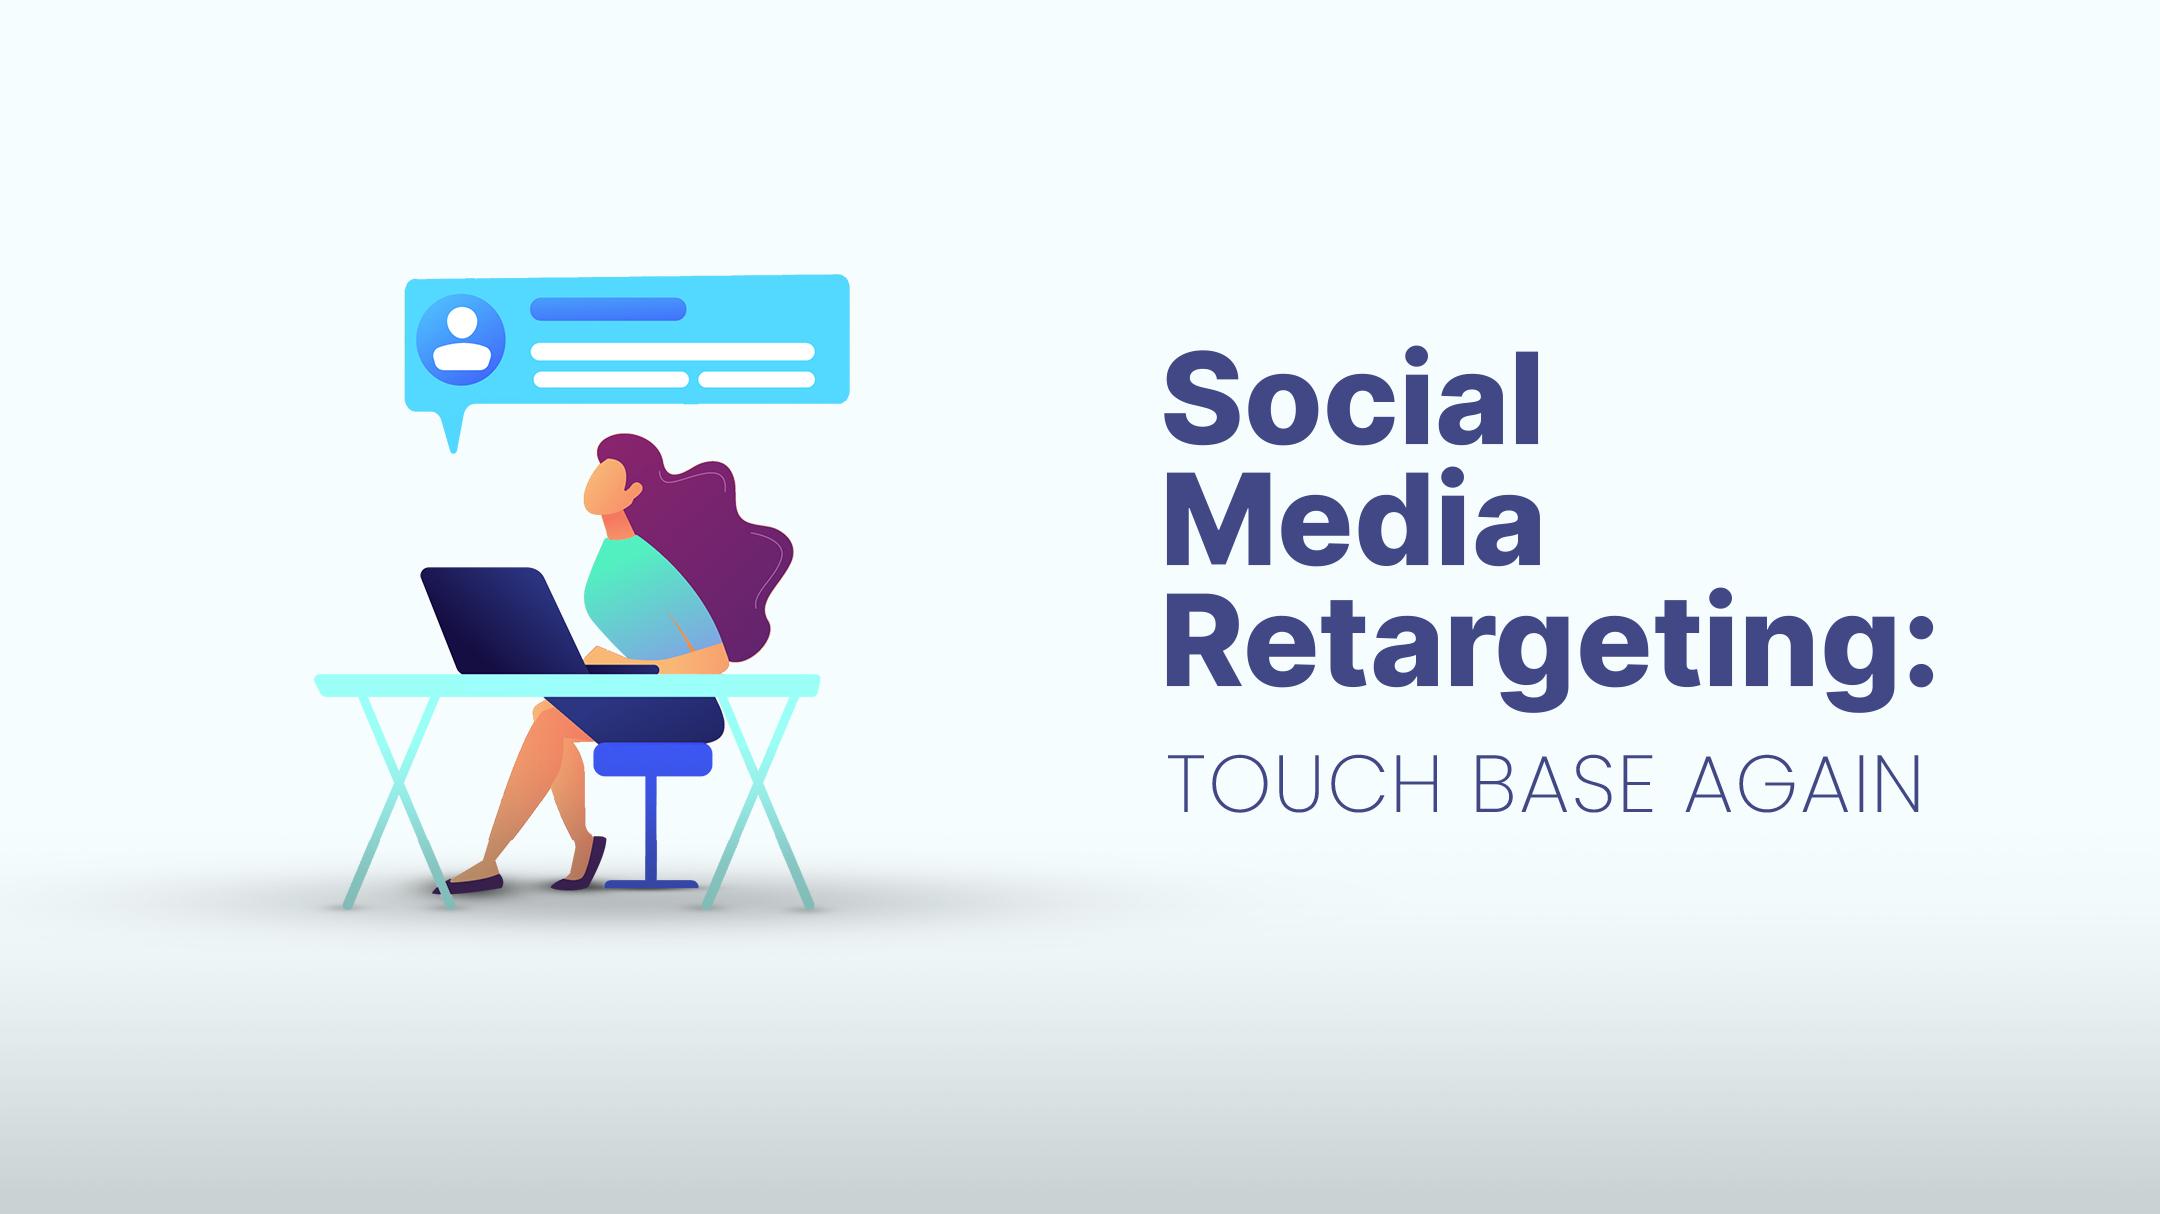 Social Media Retargeting: Touch Base Again